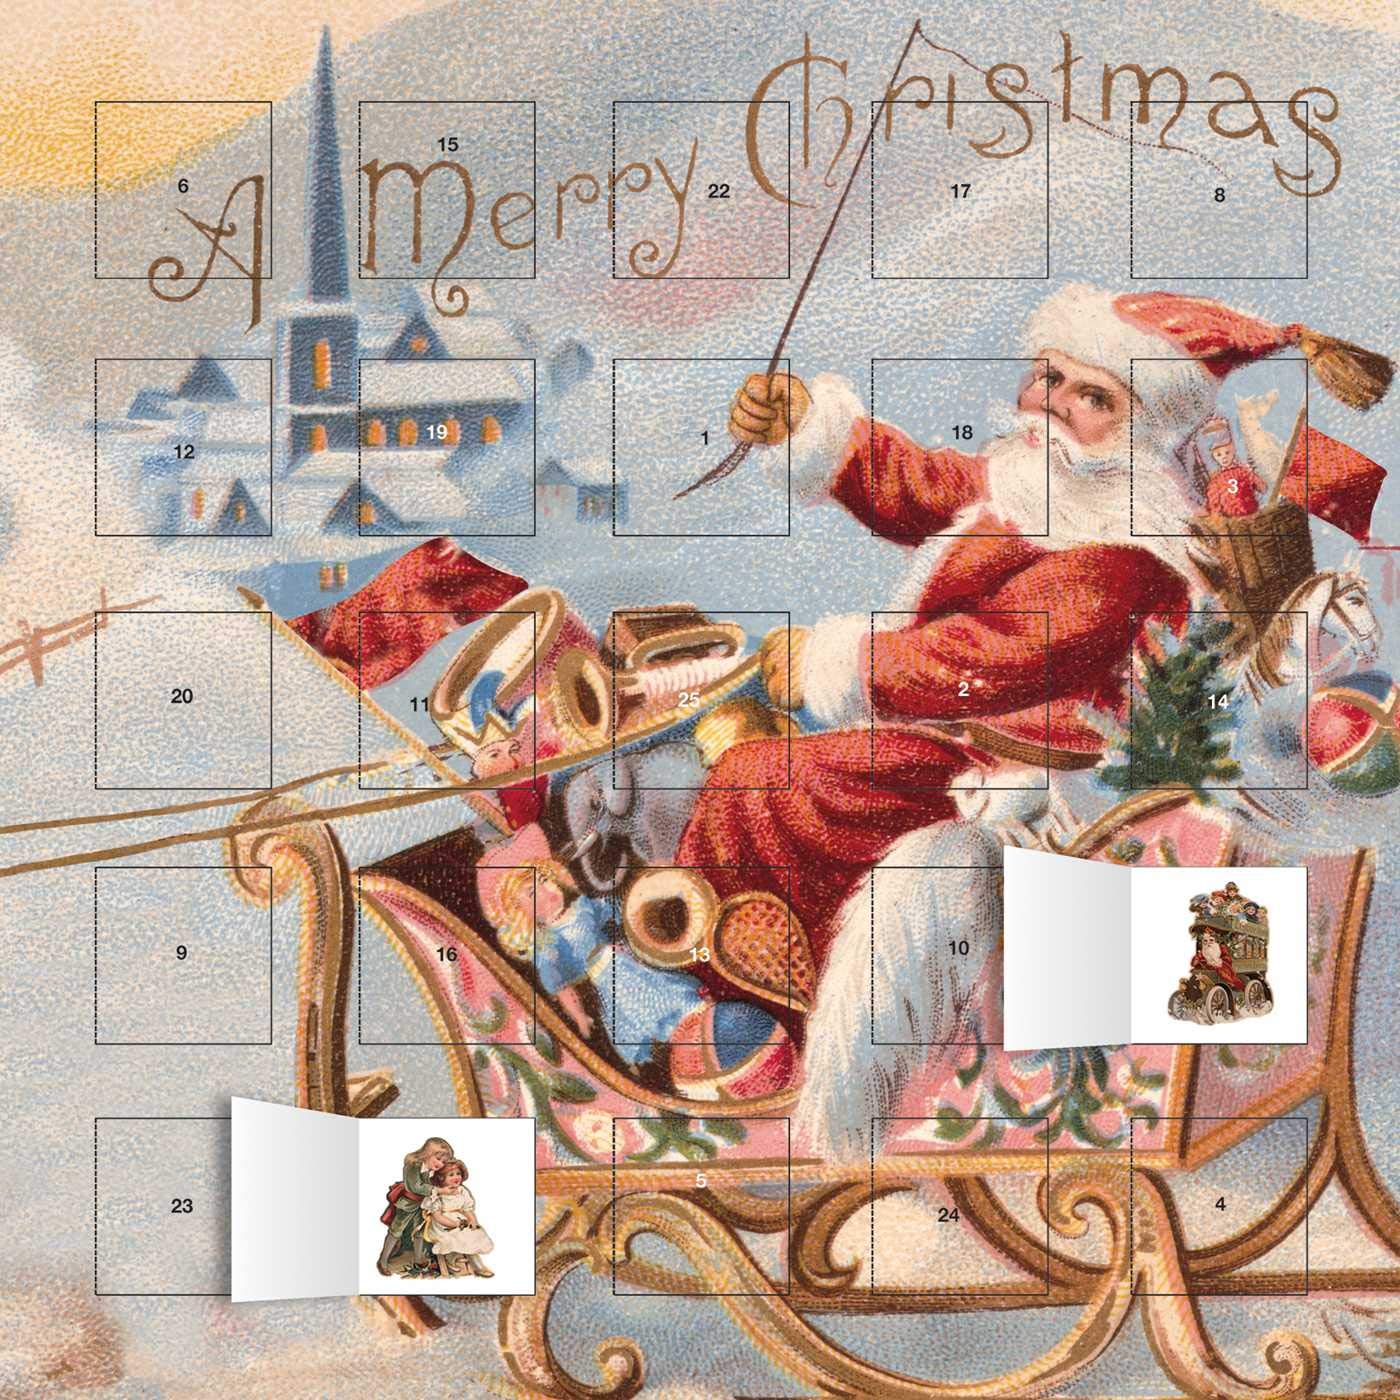  Calendar de Advent - Santa's Sleigh with Stickers - 2010 | Flame Tree Publishing 